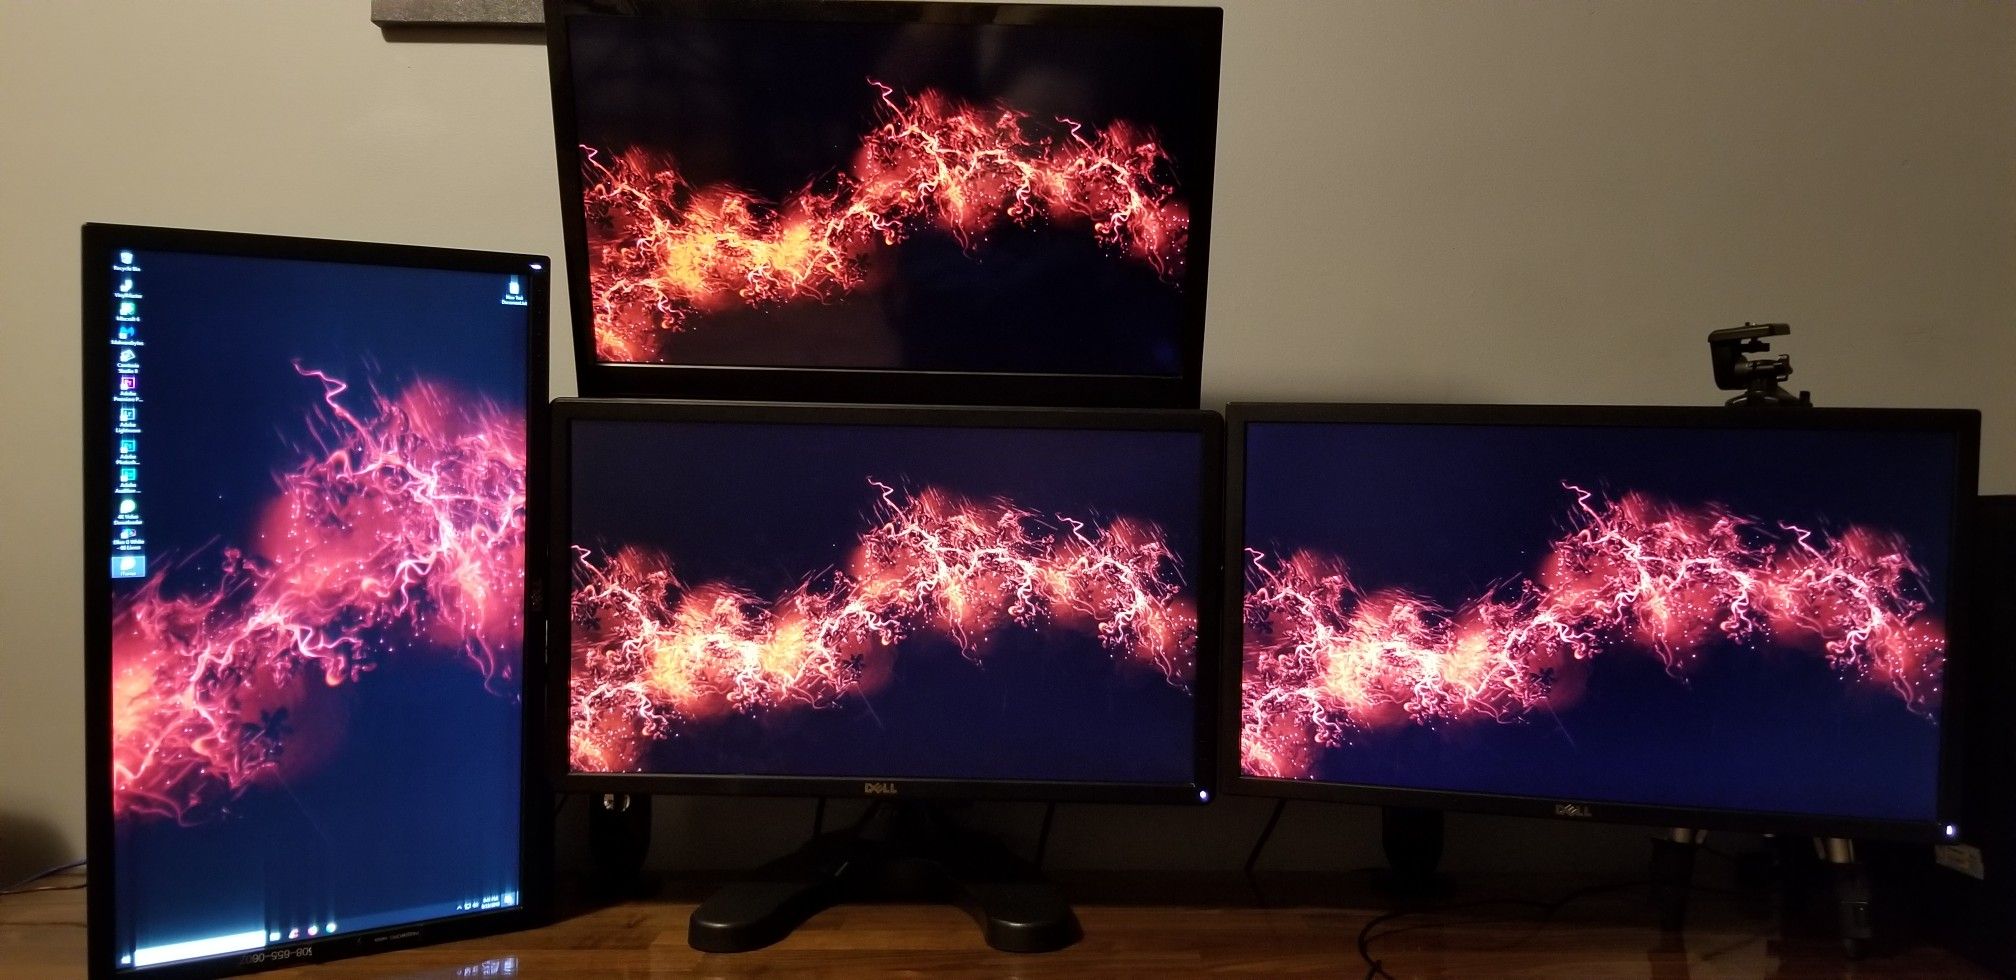 4 monitors plus 3x1 monitor stand